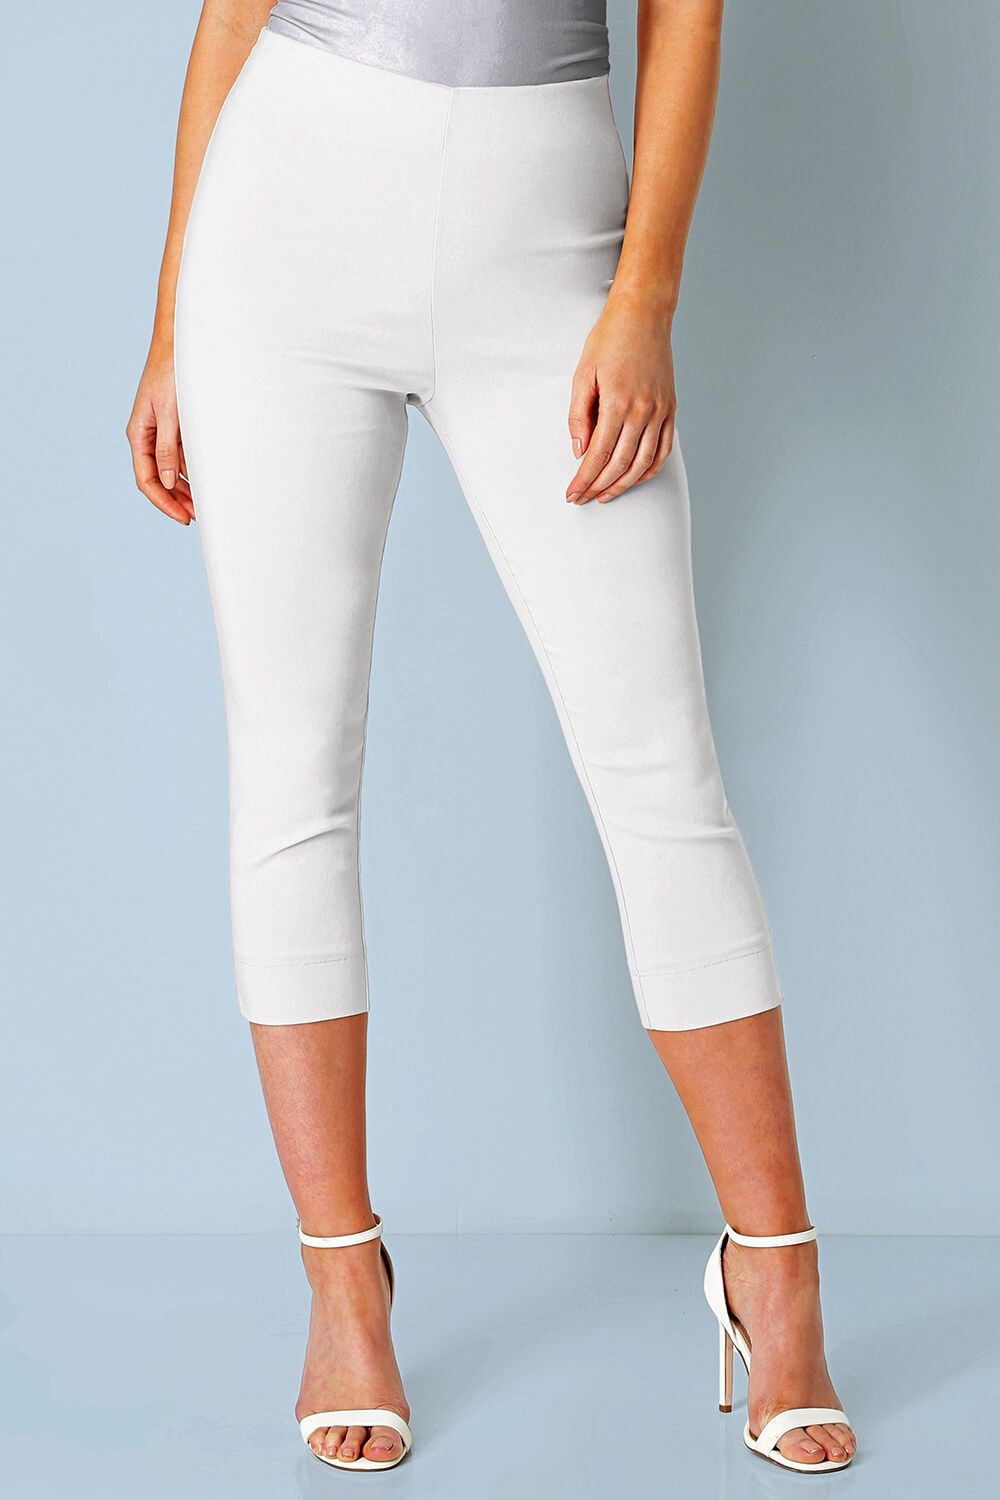 Petite Pants, Petite Cropped & Petite White Pants